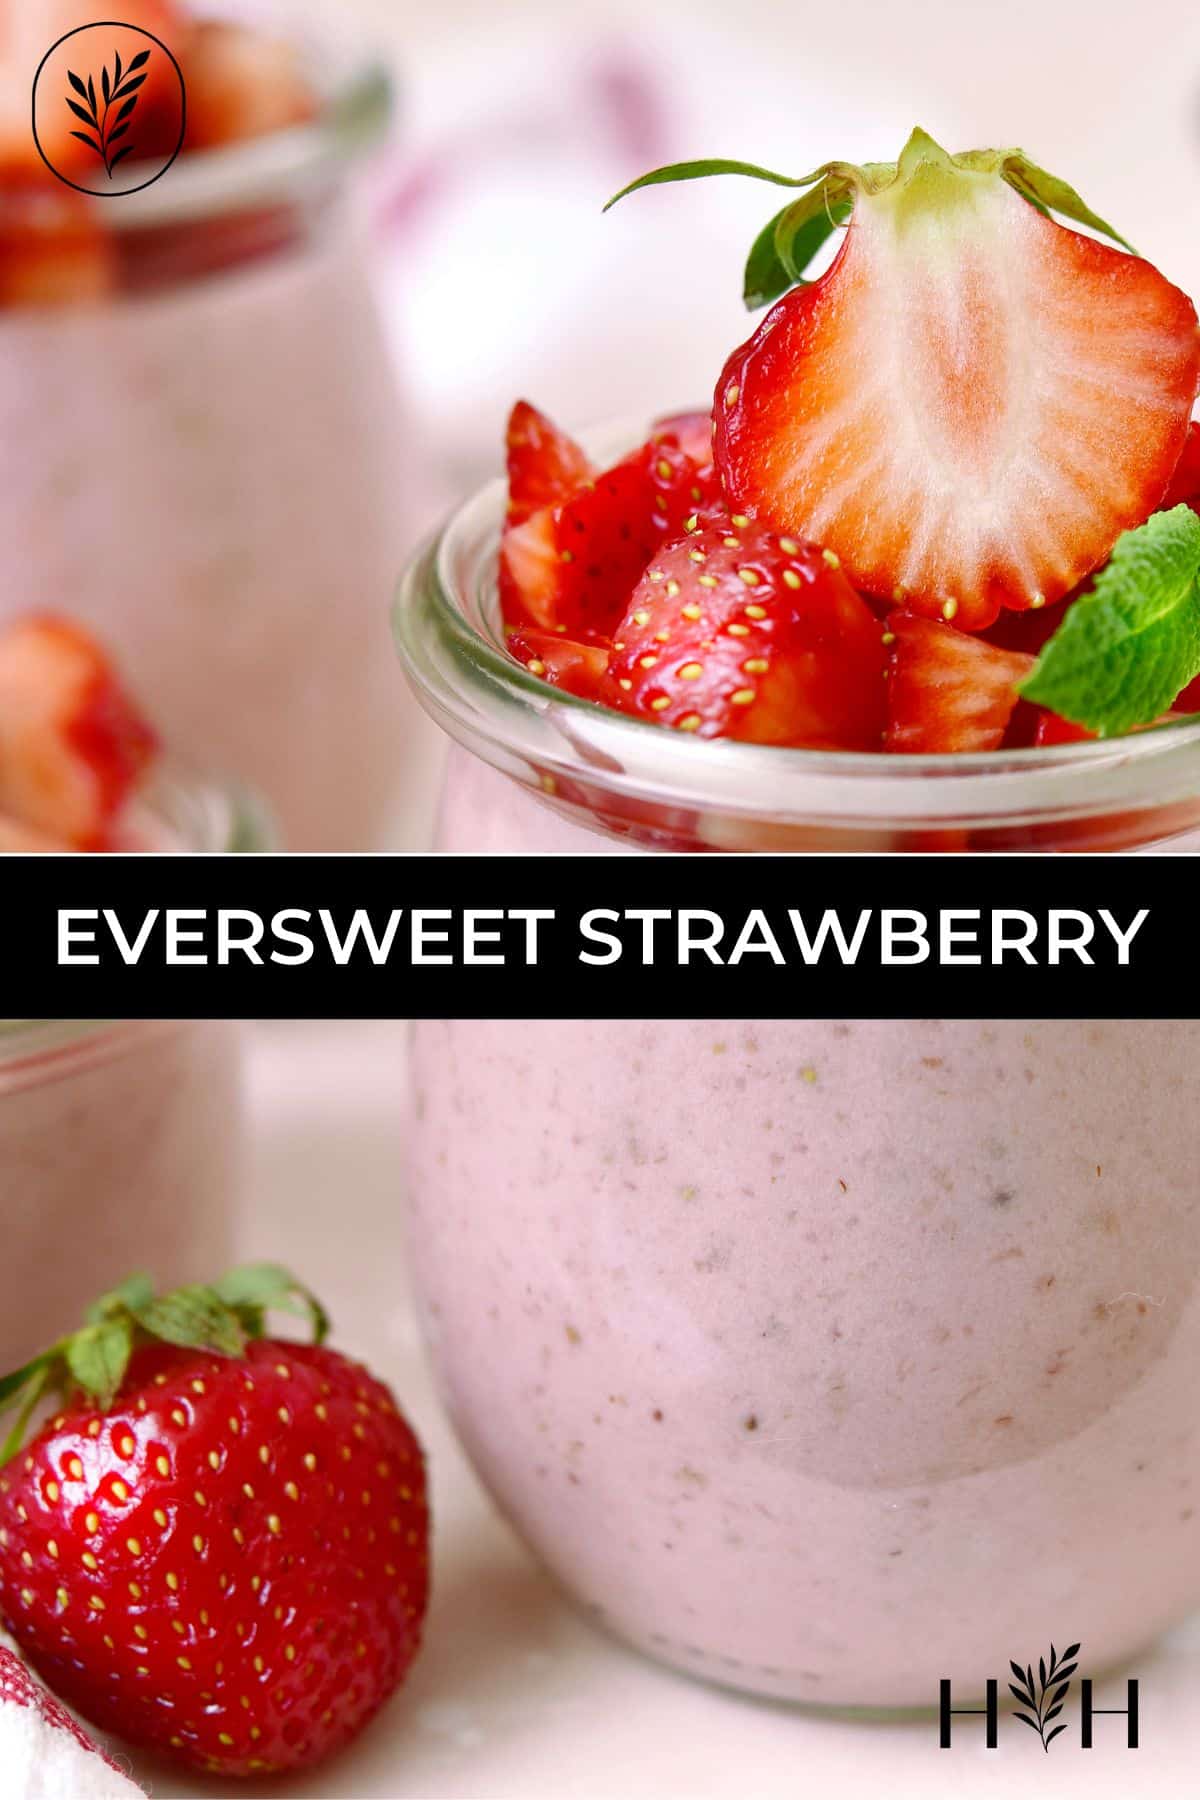 Eversweet strawberry via @home4theharvest